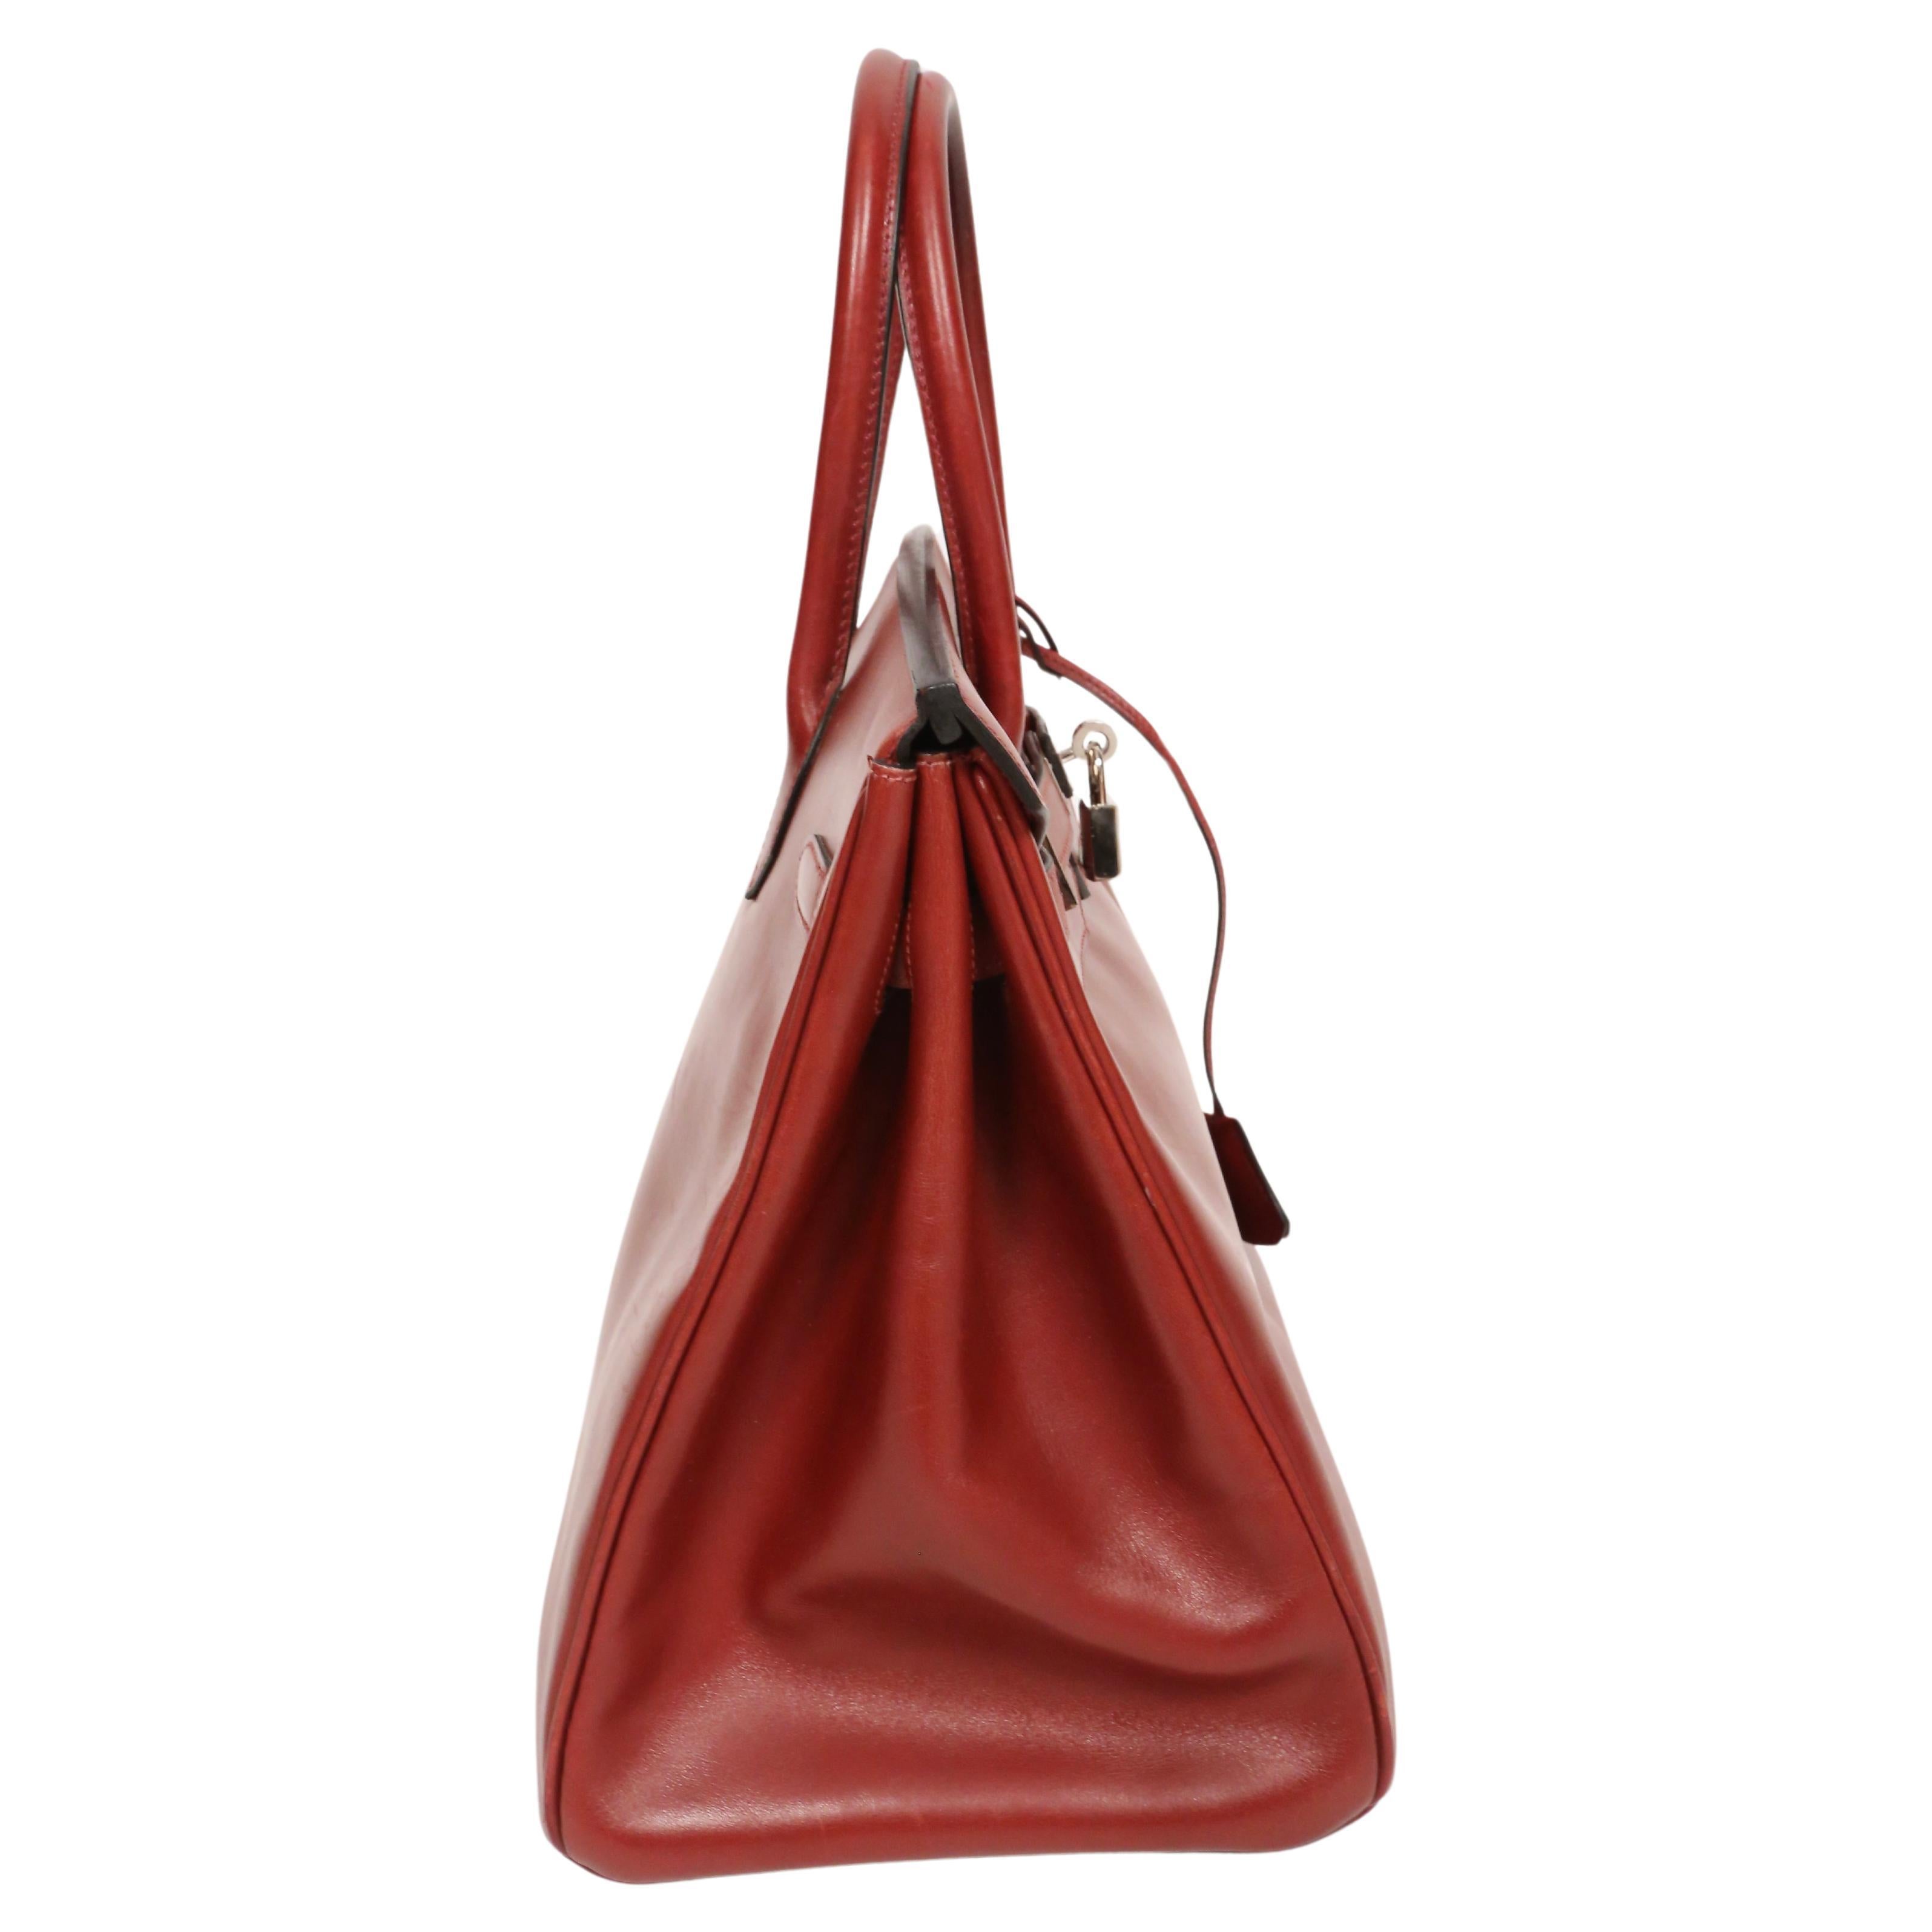 Women's or Men's 2005 HERMES 35 cm rouge box leather BIRKIN bag